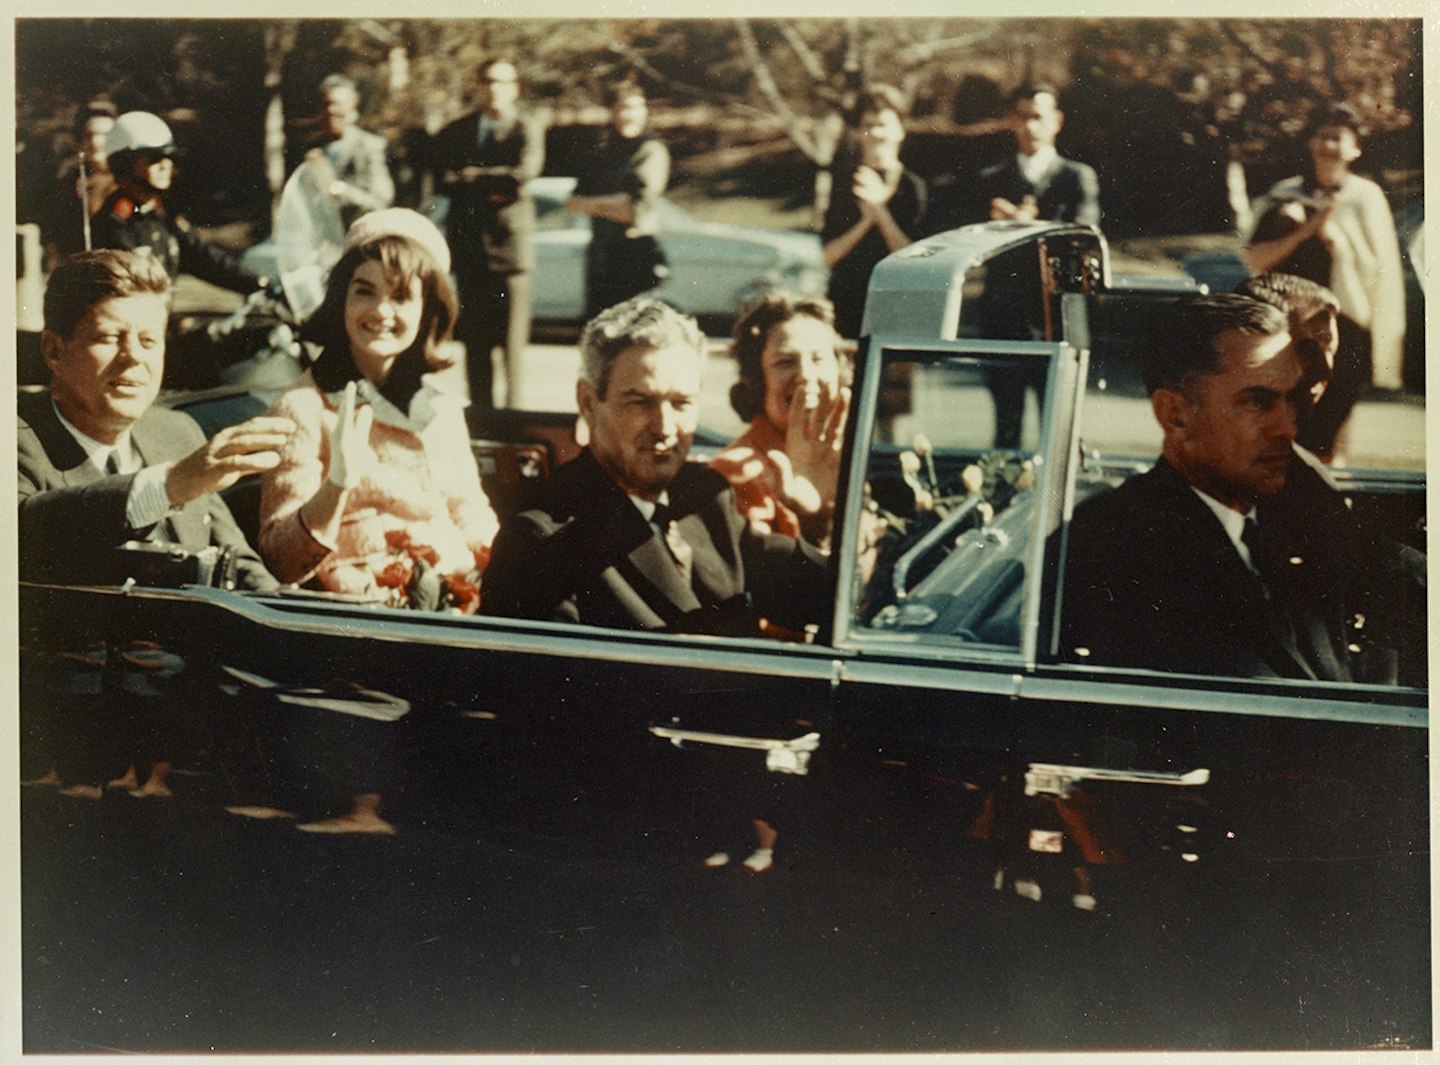 JFK Revisited